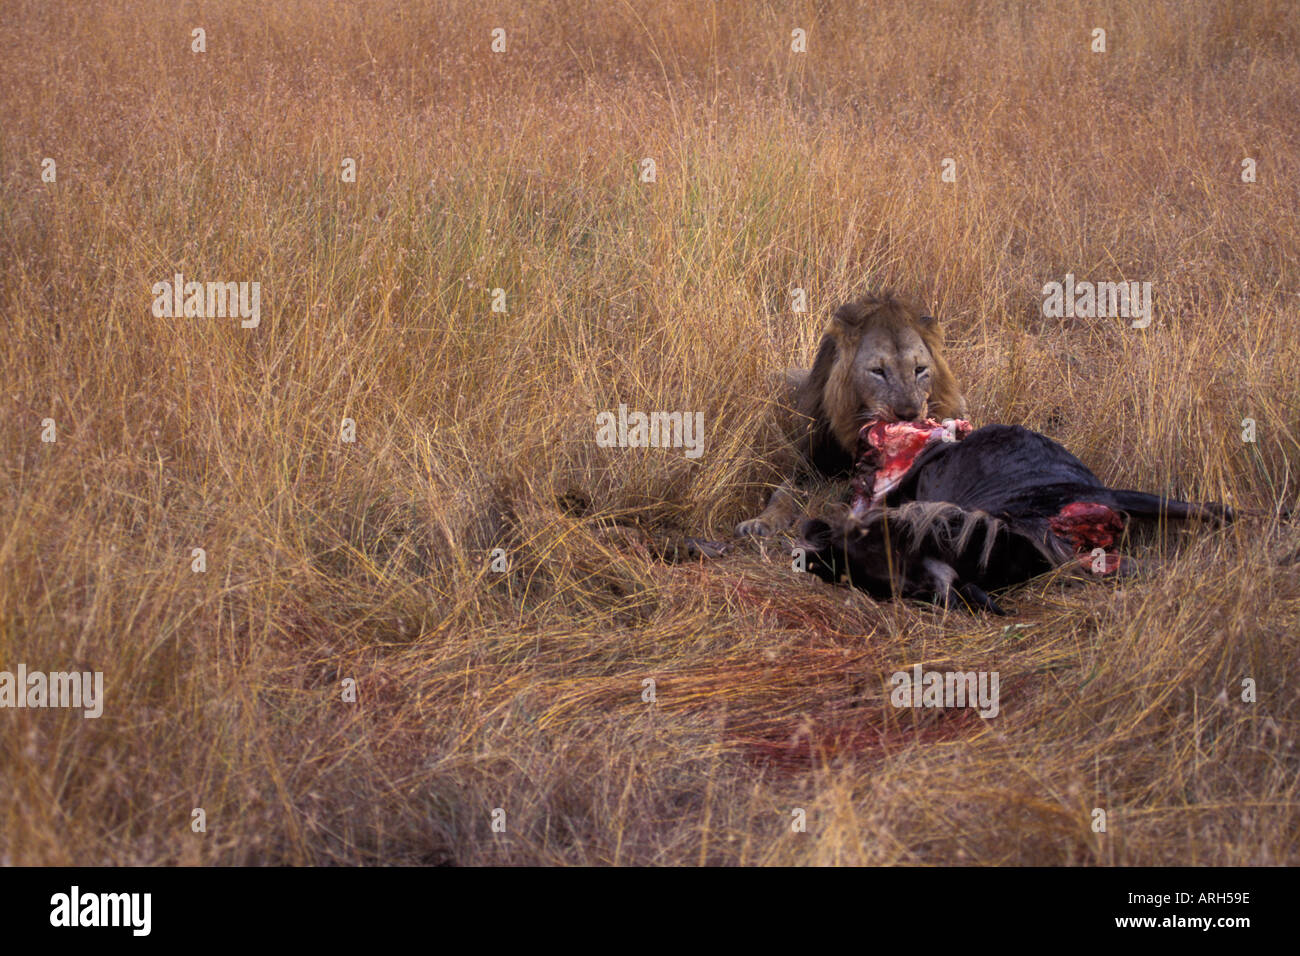 Male Lion Eating Gnu in High Grass of Masai Mara Stock Photo